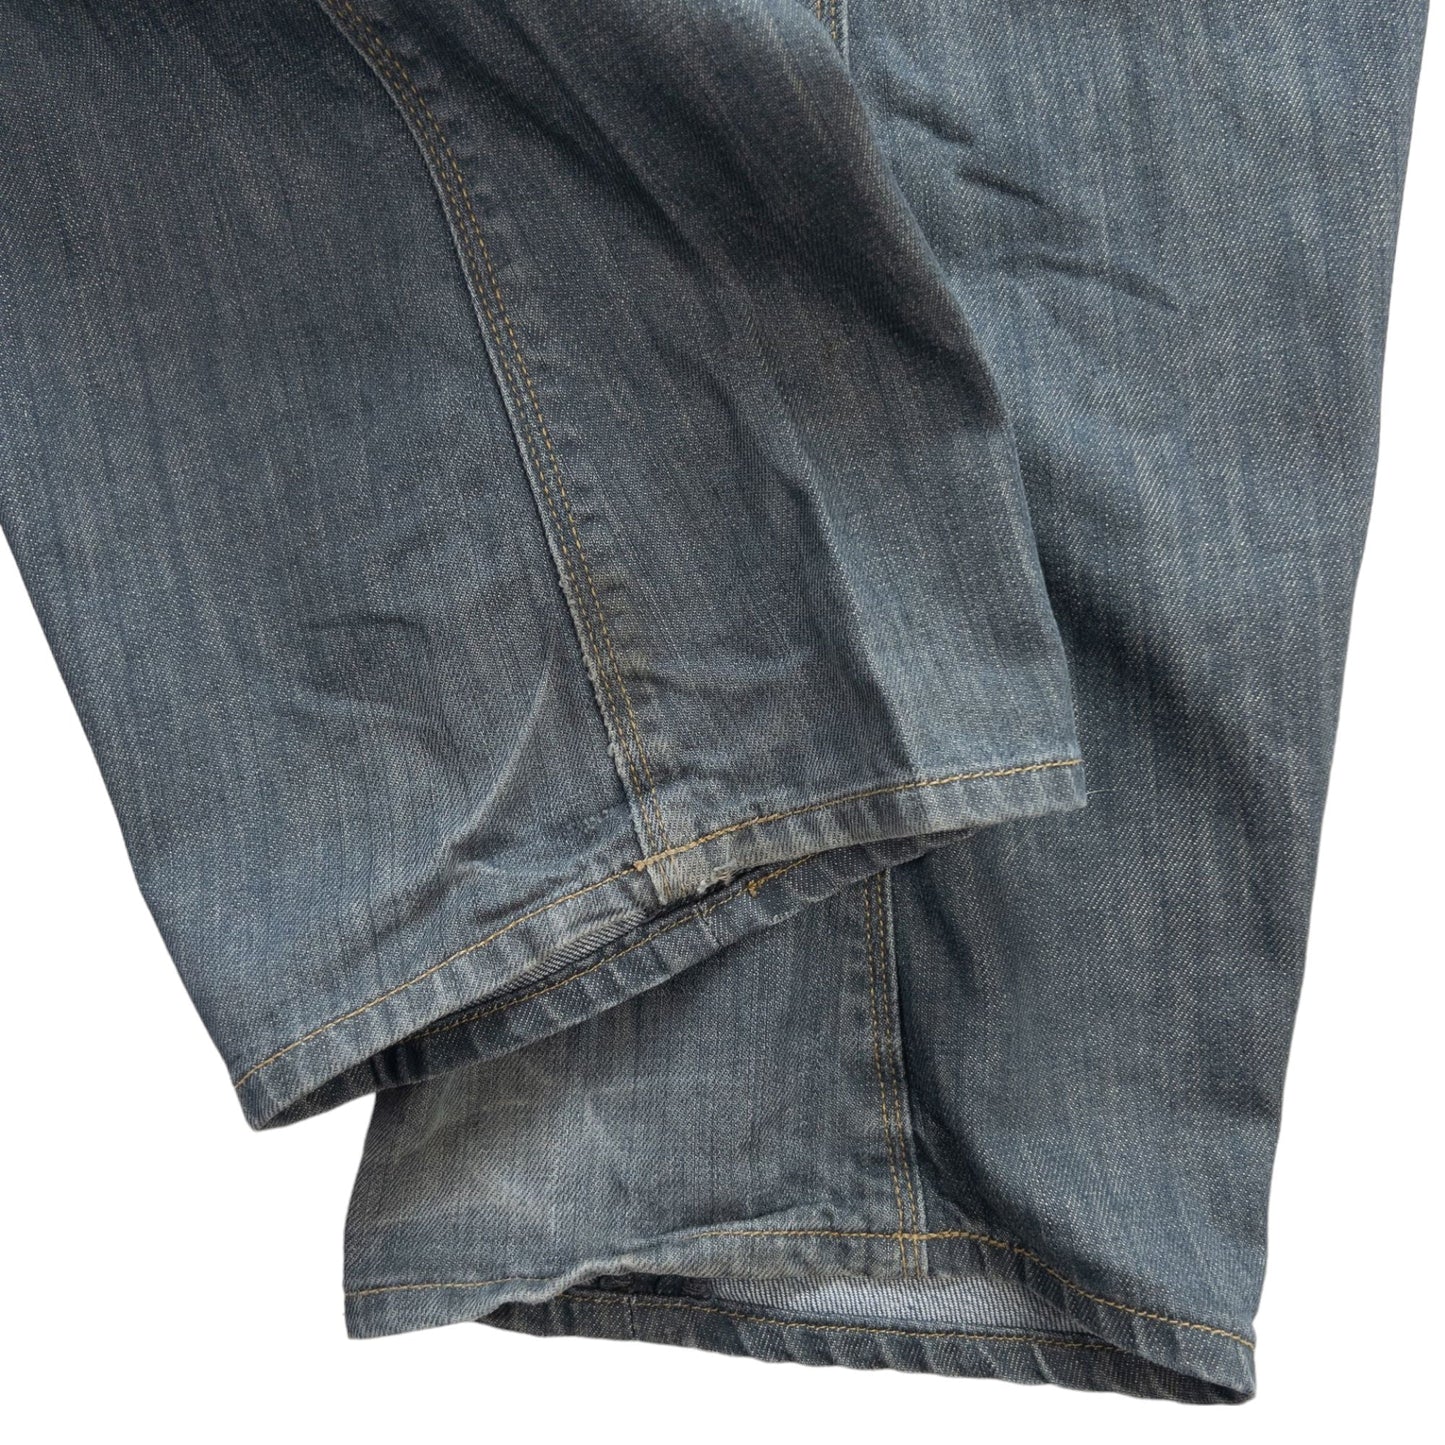 Vintage Levi's Engineered Denim Jeans Size W32